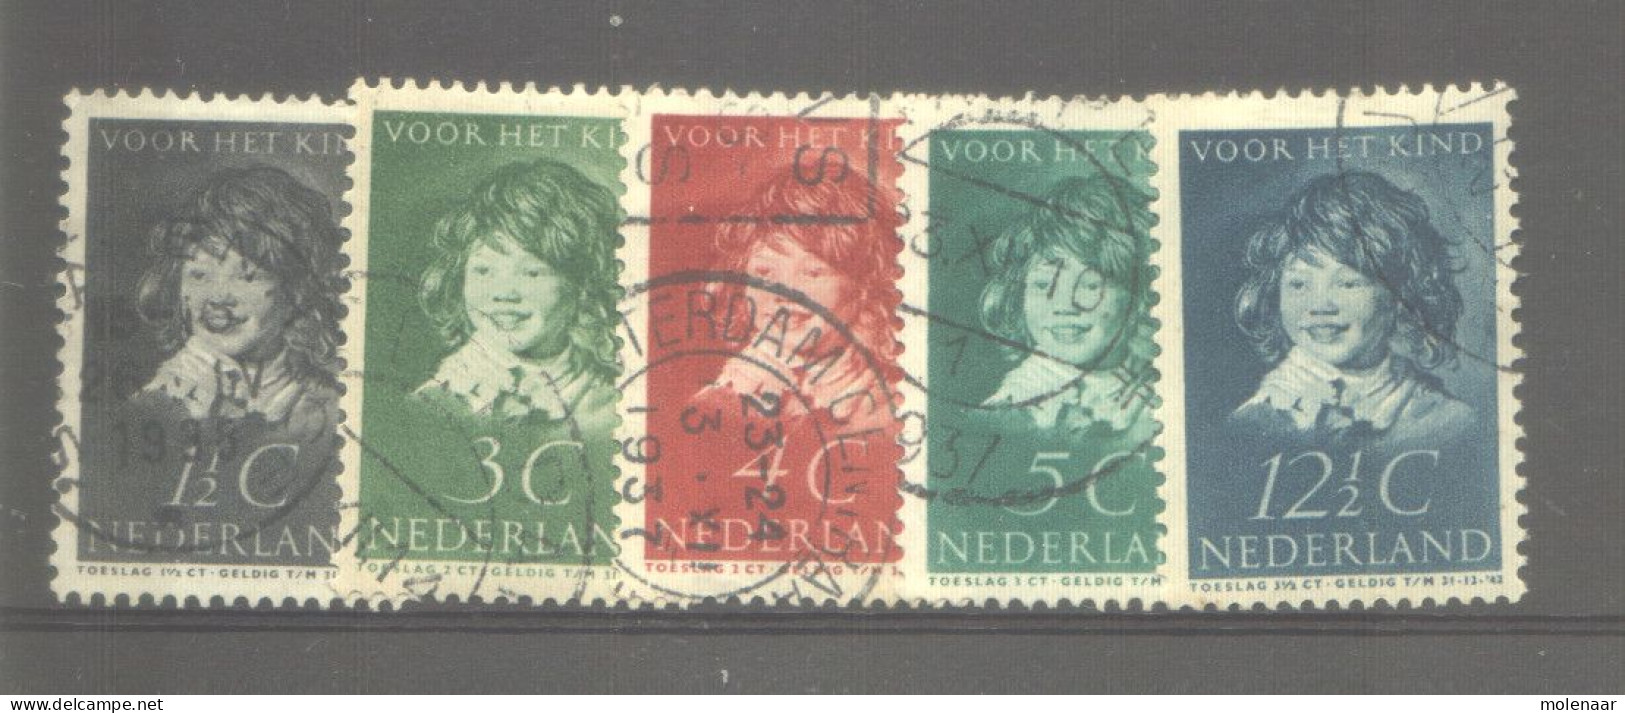 Postzegels > Europa > Nederland > Periode 1891-1948 (Wilhelmina) > 1891-1909 > 300 -304 Gebruikt (11769) - Usados